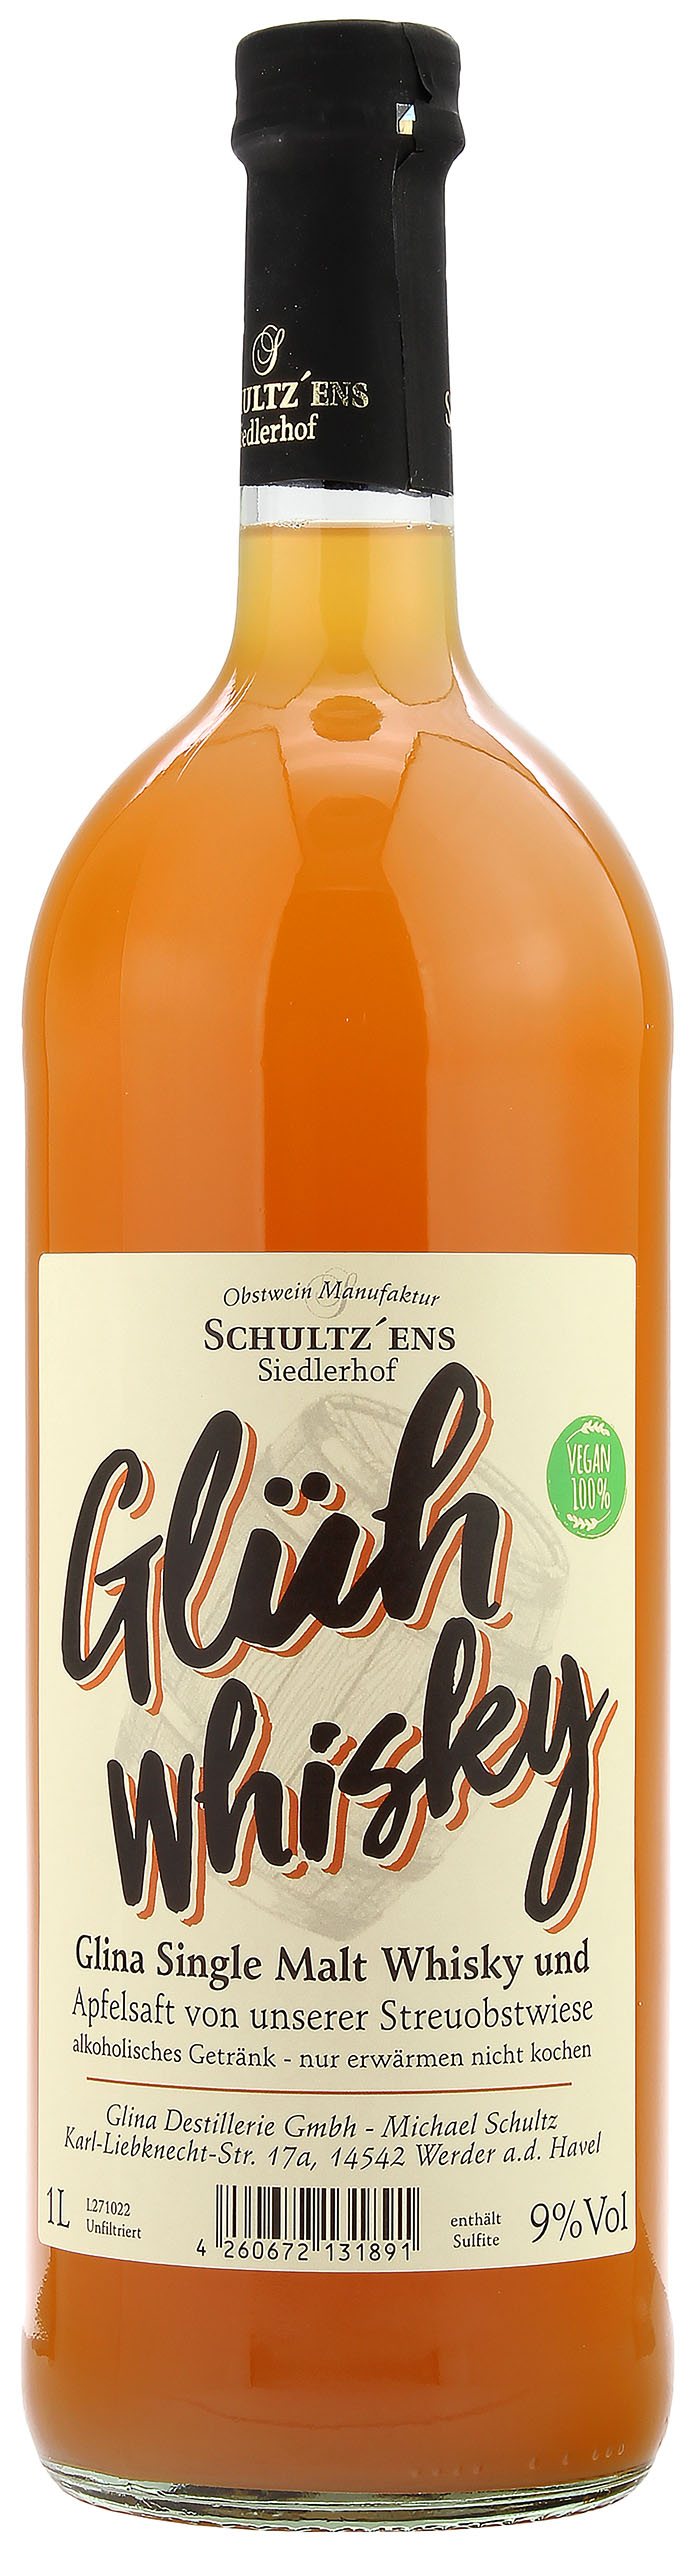 Glina Glüh Whisky 9.0% 1 Liter